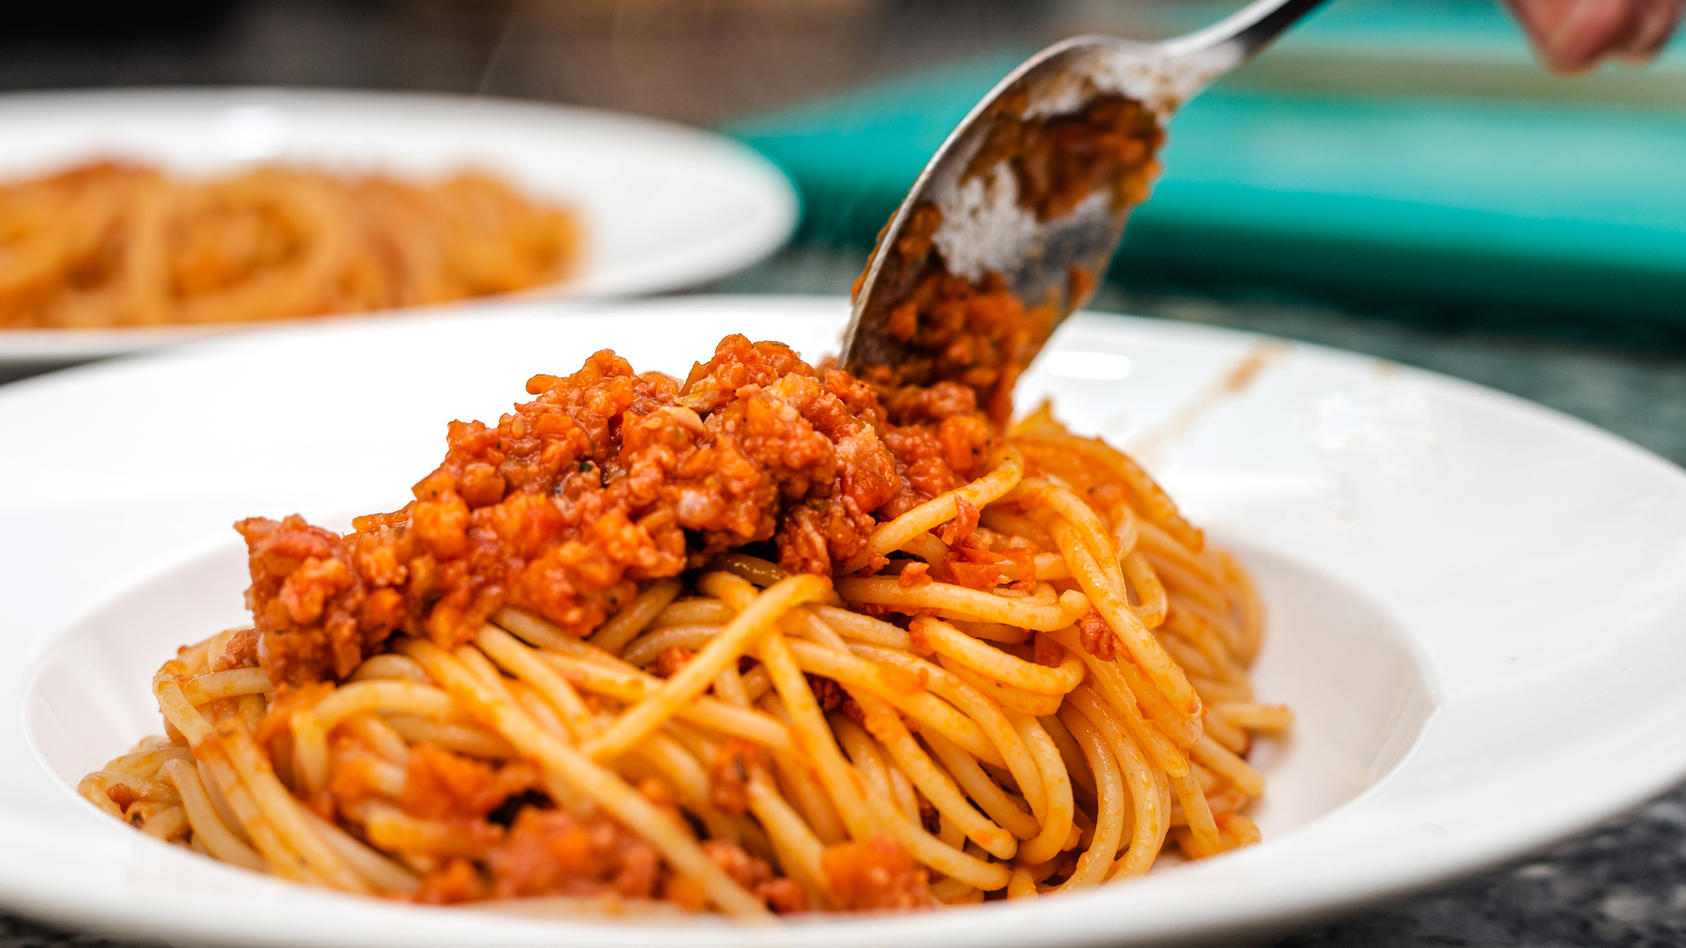 Koch richtet Spaghetti Bolognese auf Teller an